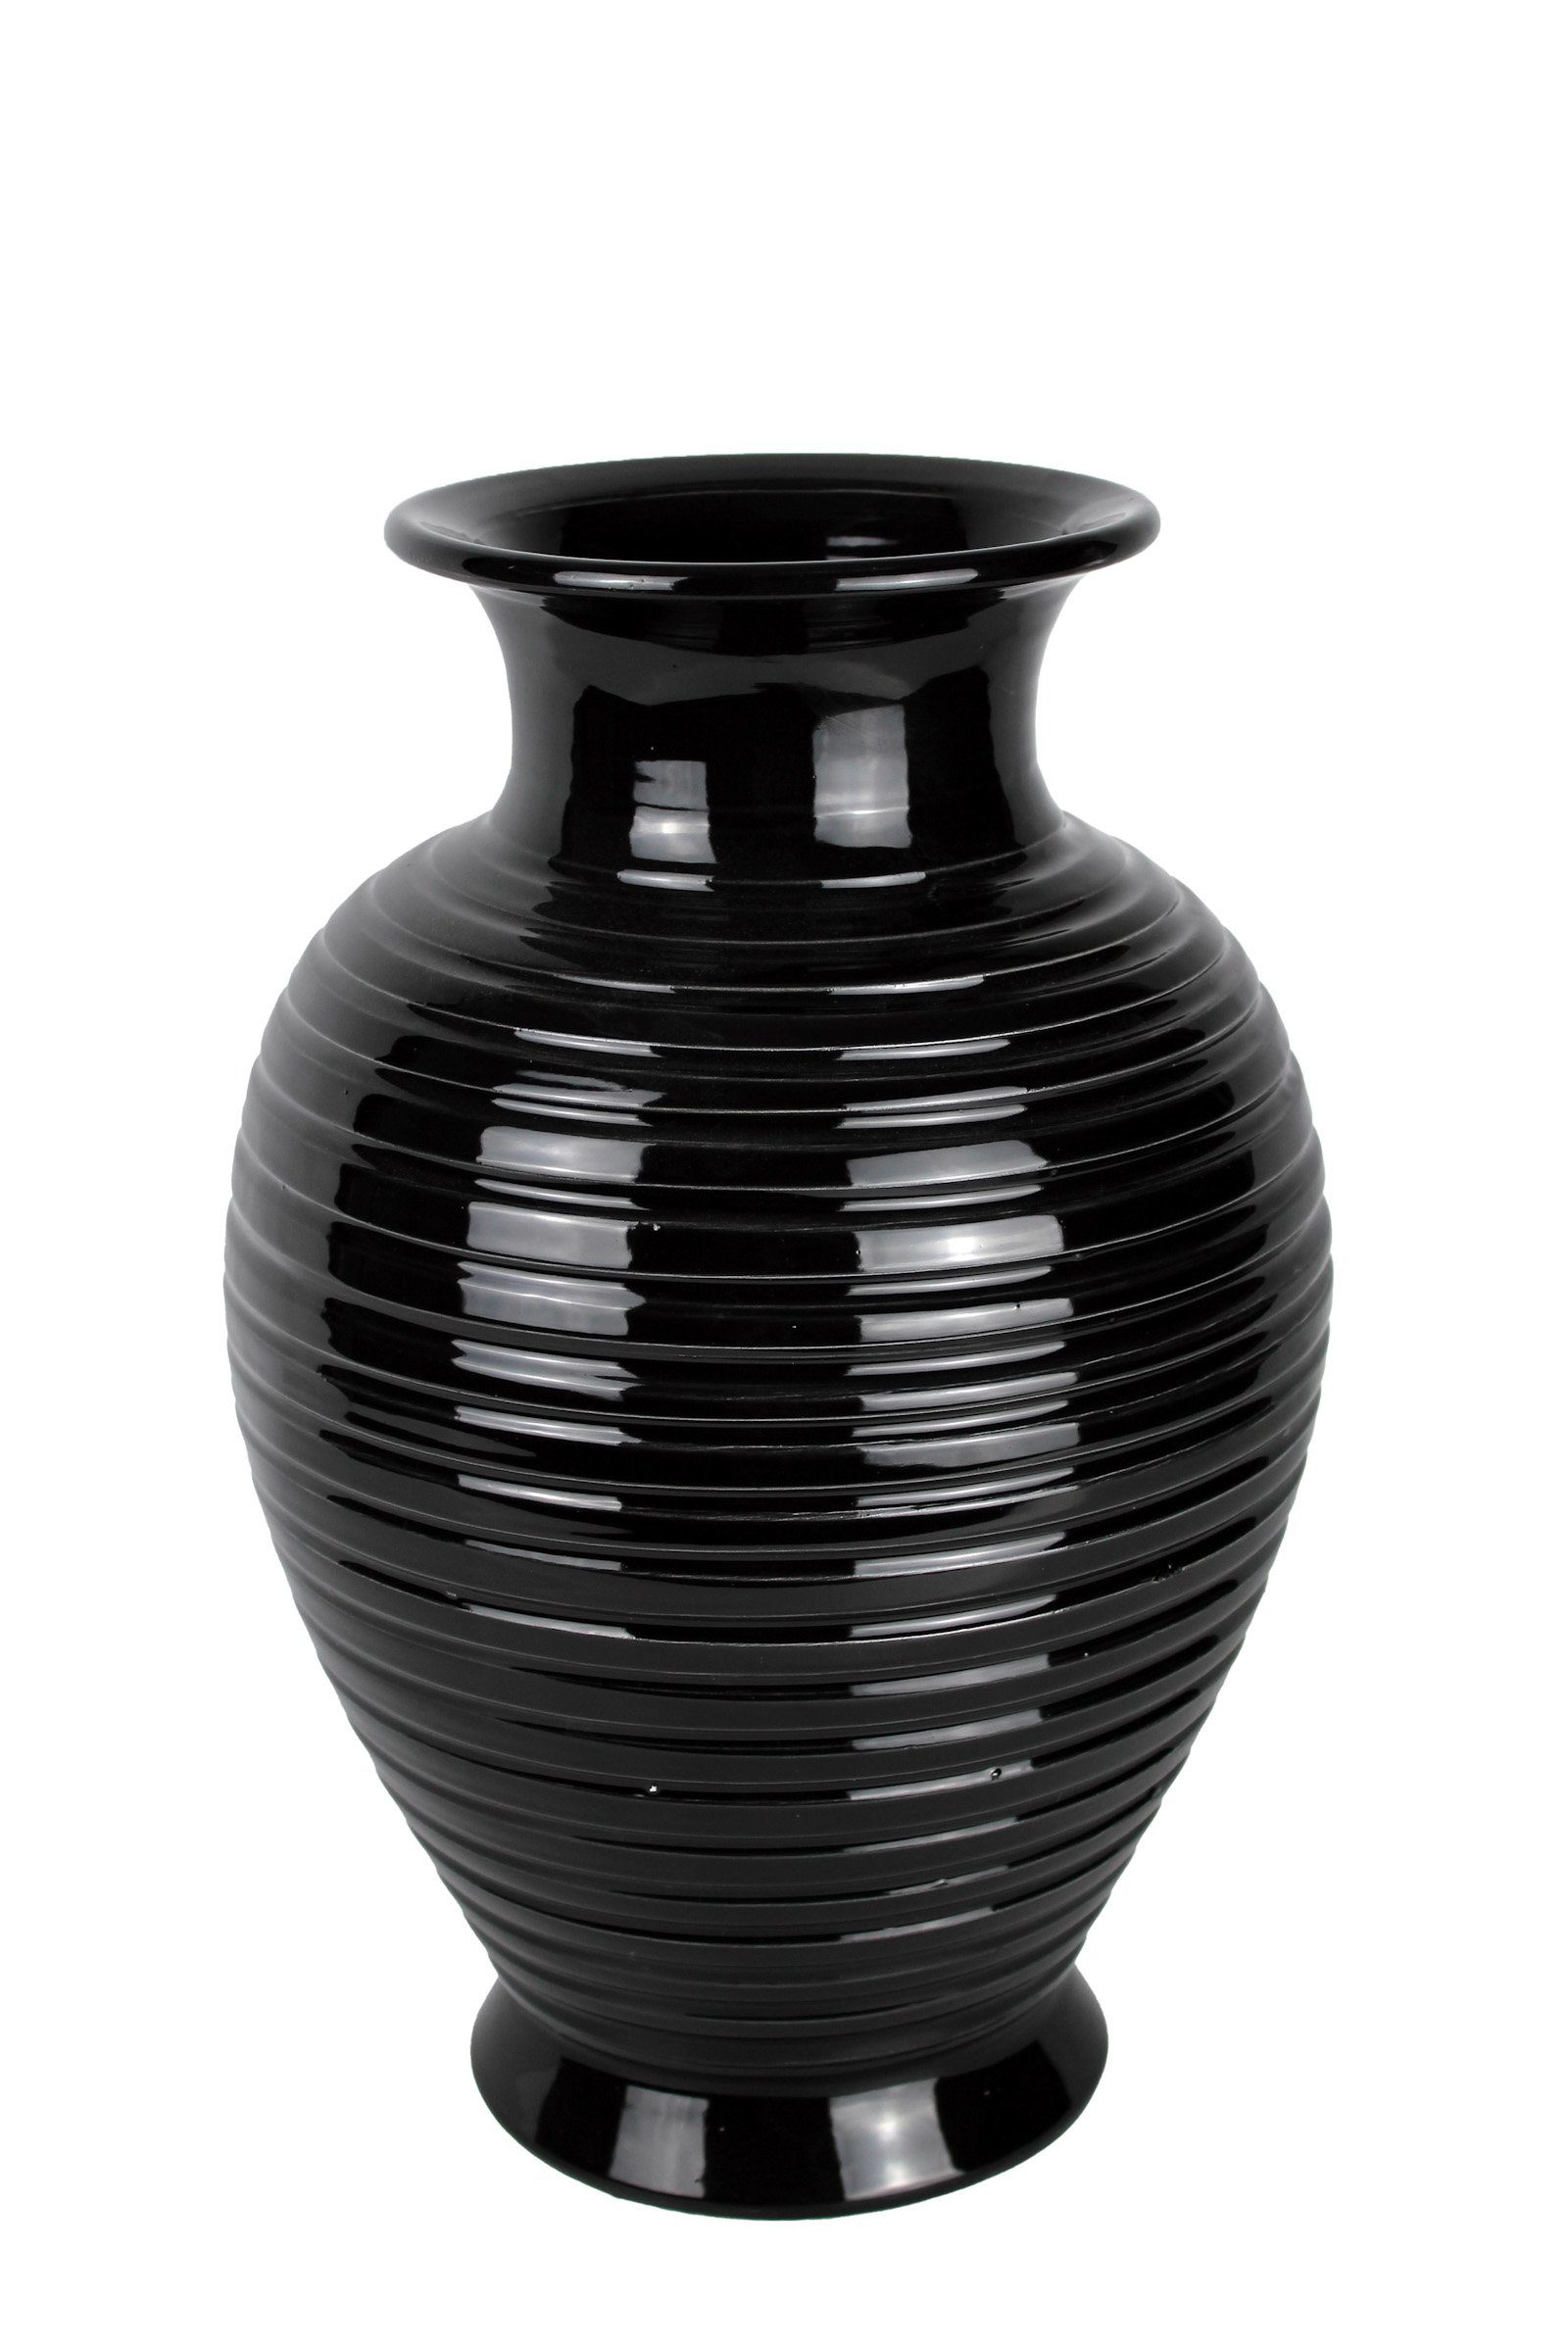 Signature Home Collection Dekovase Vase Keramik schwarz 36 cm mit Ringmuster (1 Stück, 1 Keramikvase), Handgefertigte Keramik aus Italien